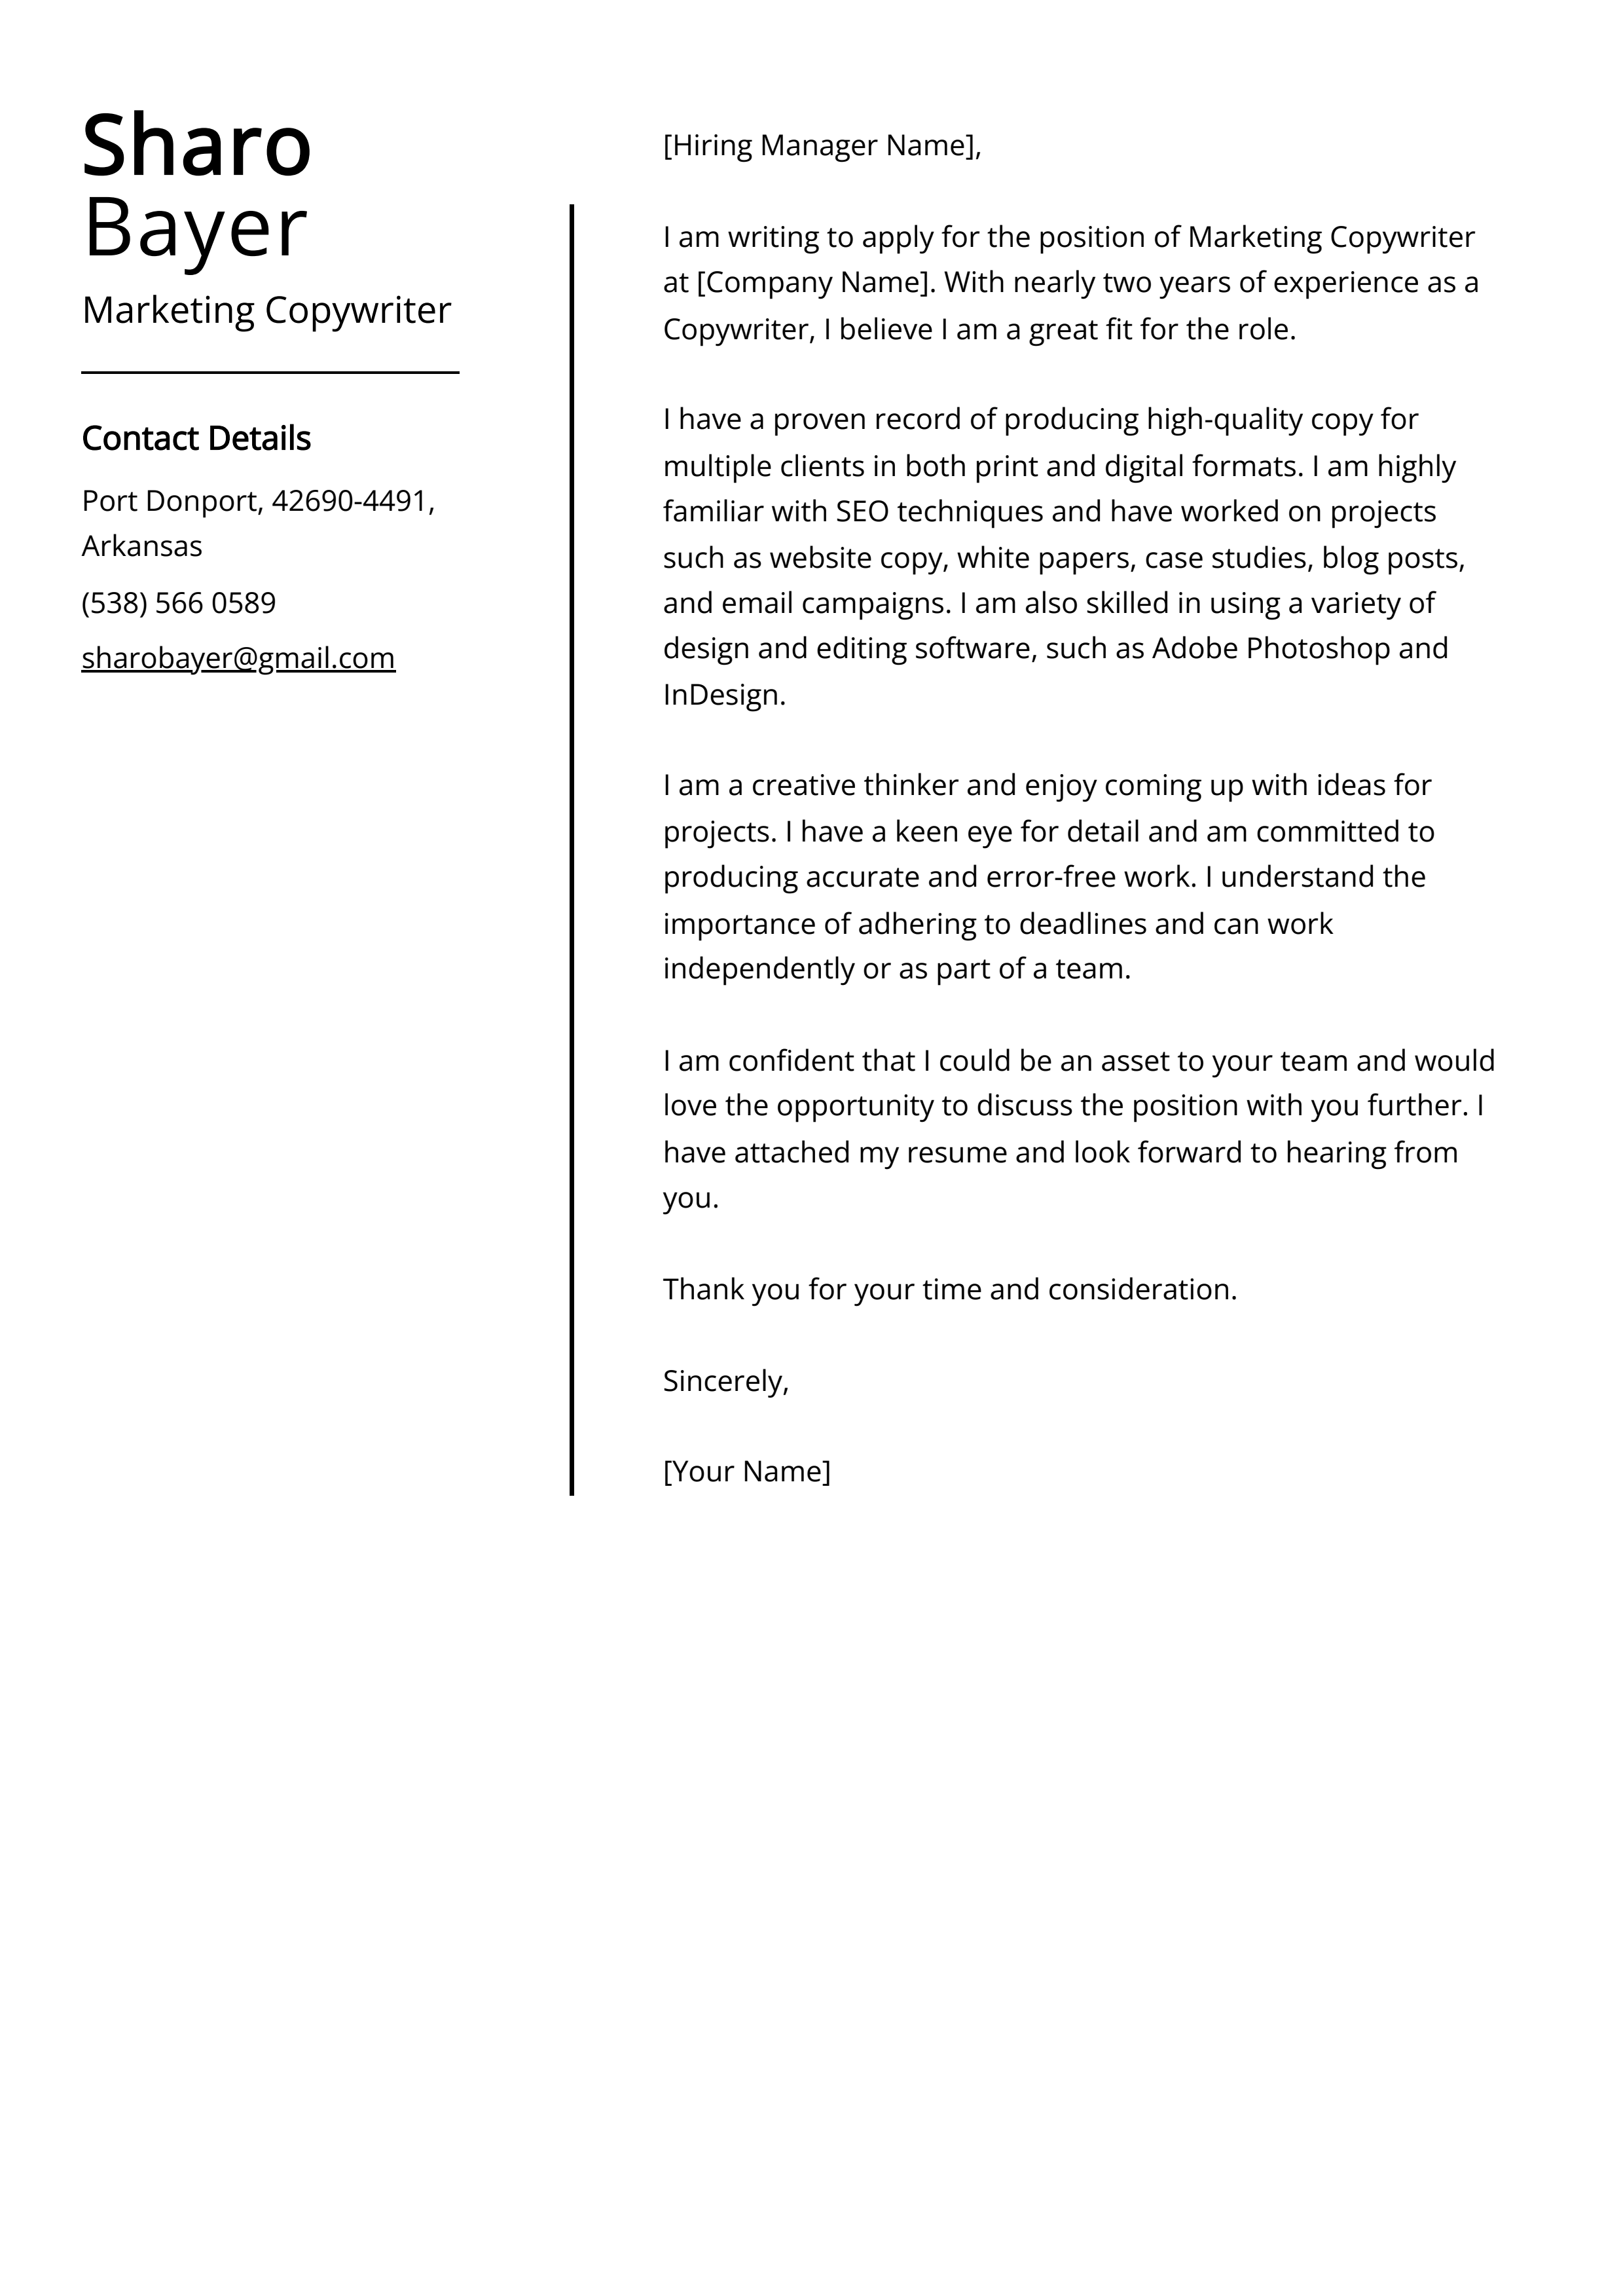 Marketing Copywriter Cover Letter Example